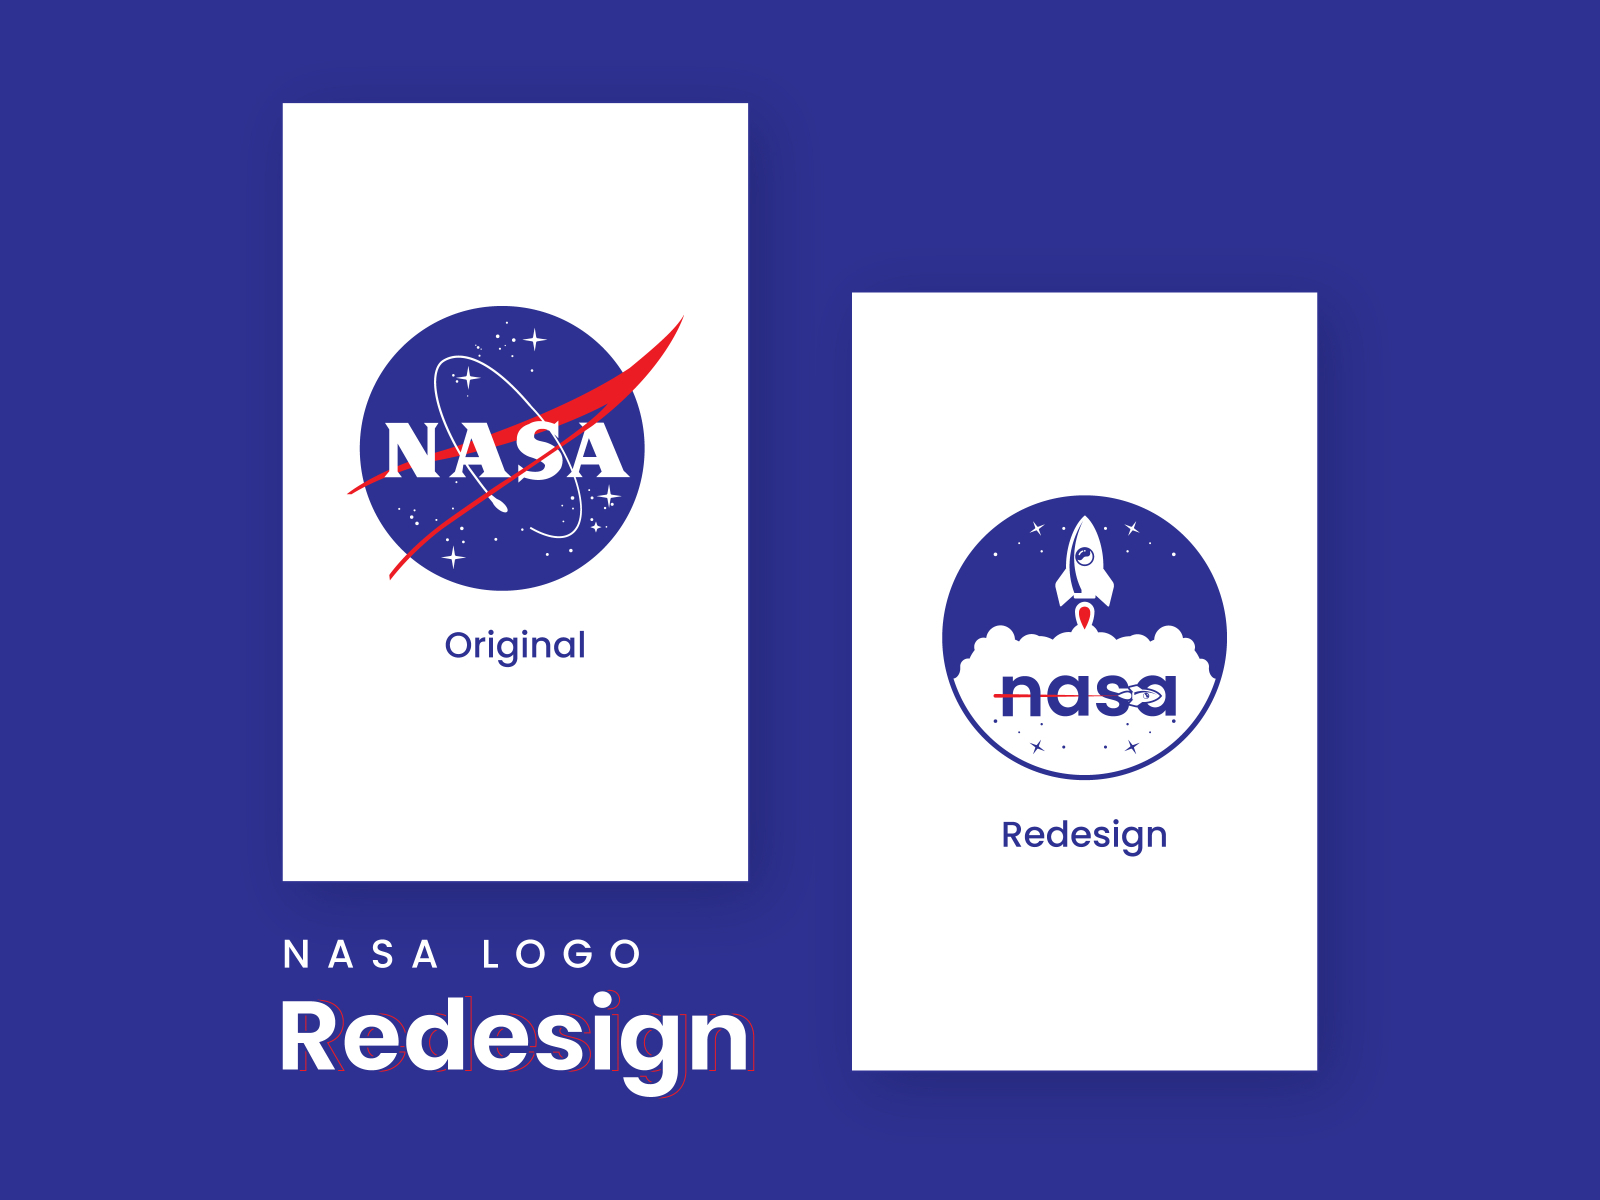 Nasa Logo redesign by Rakibul Islam on Dribbble